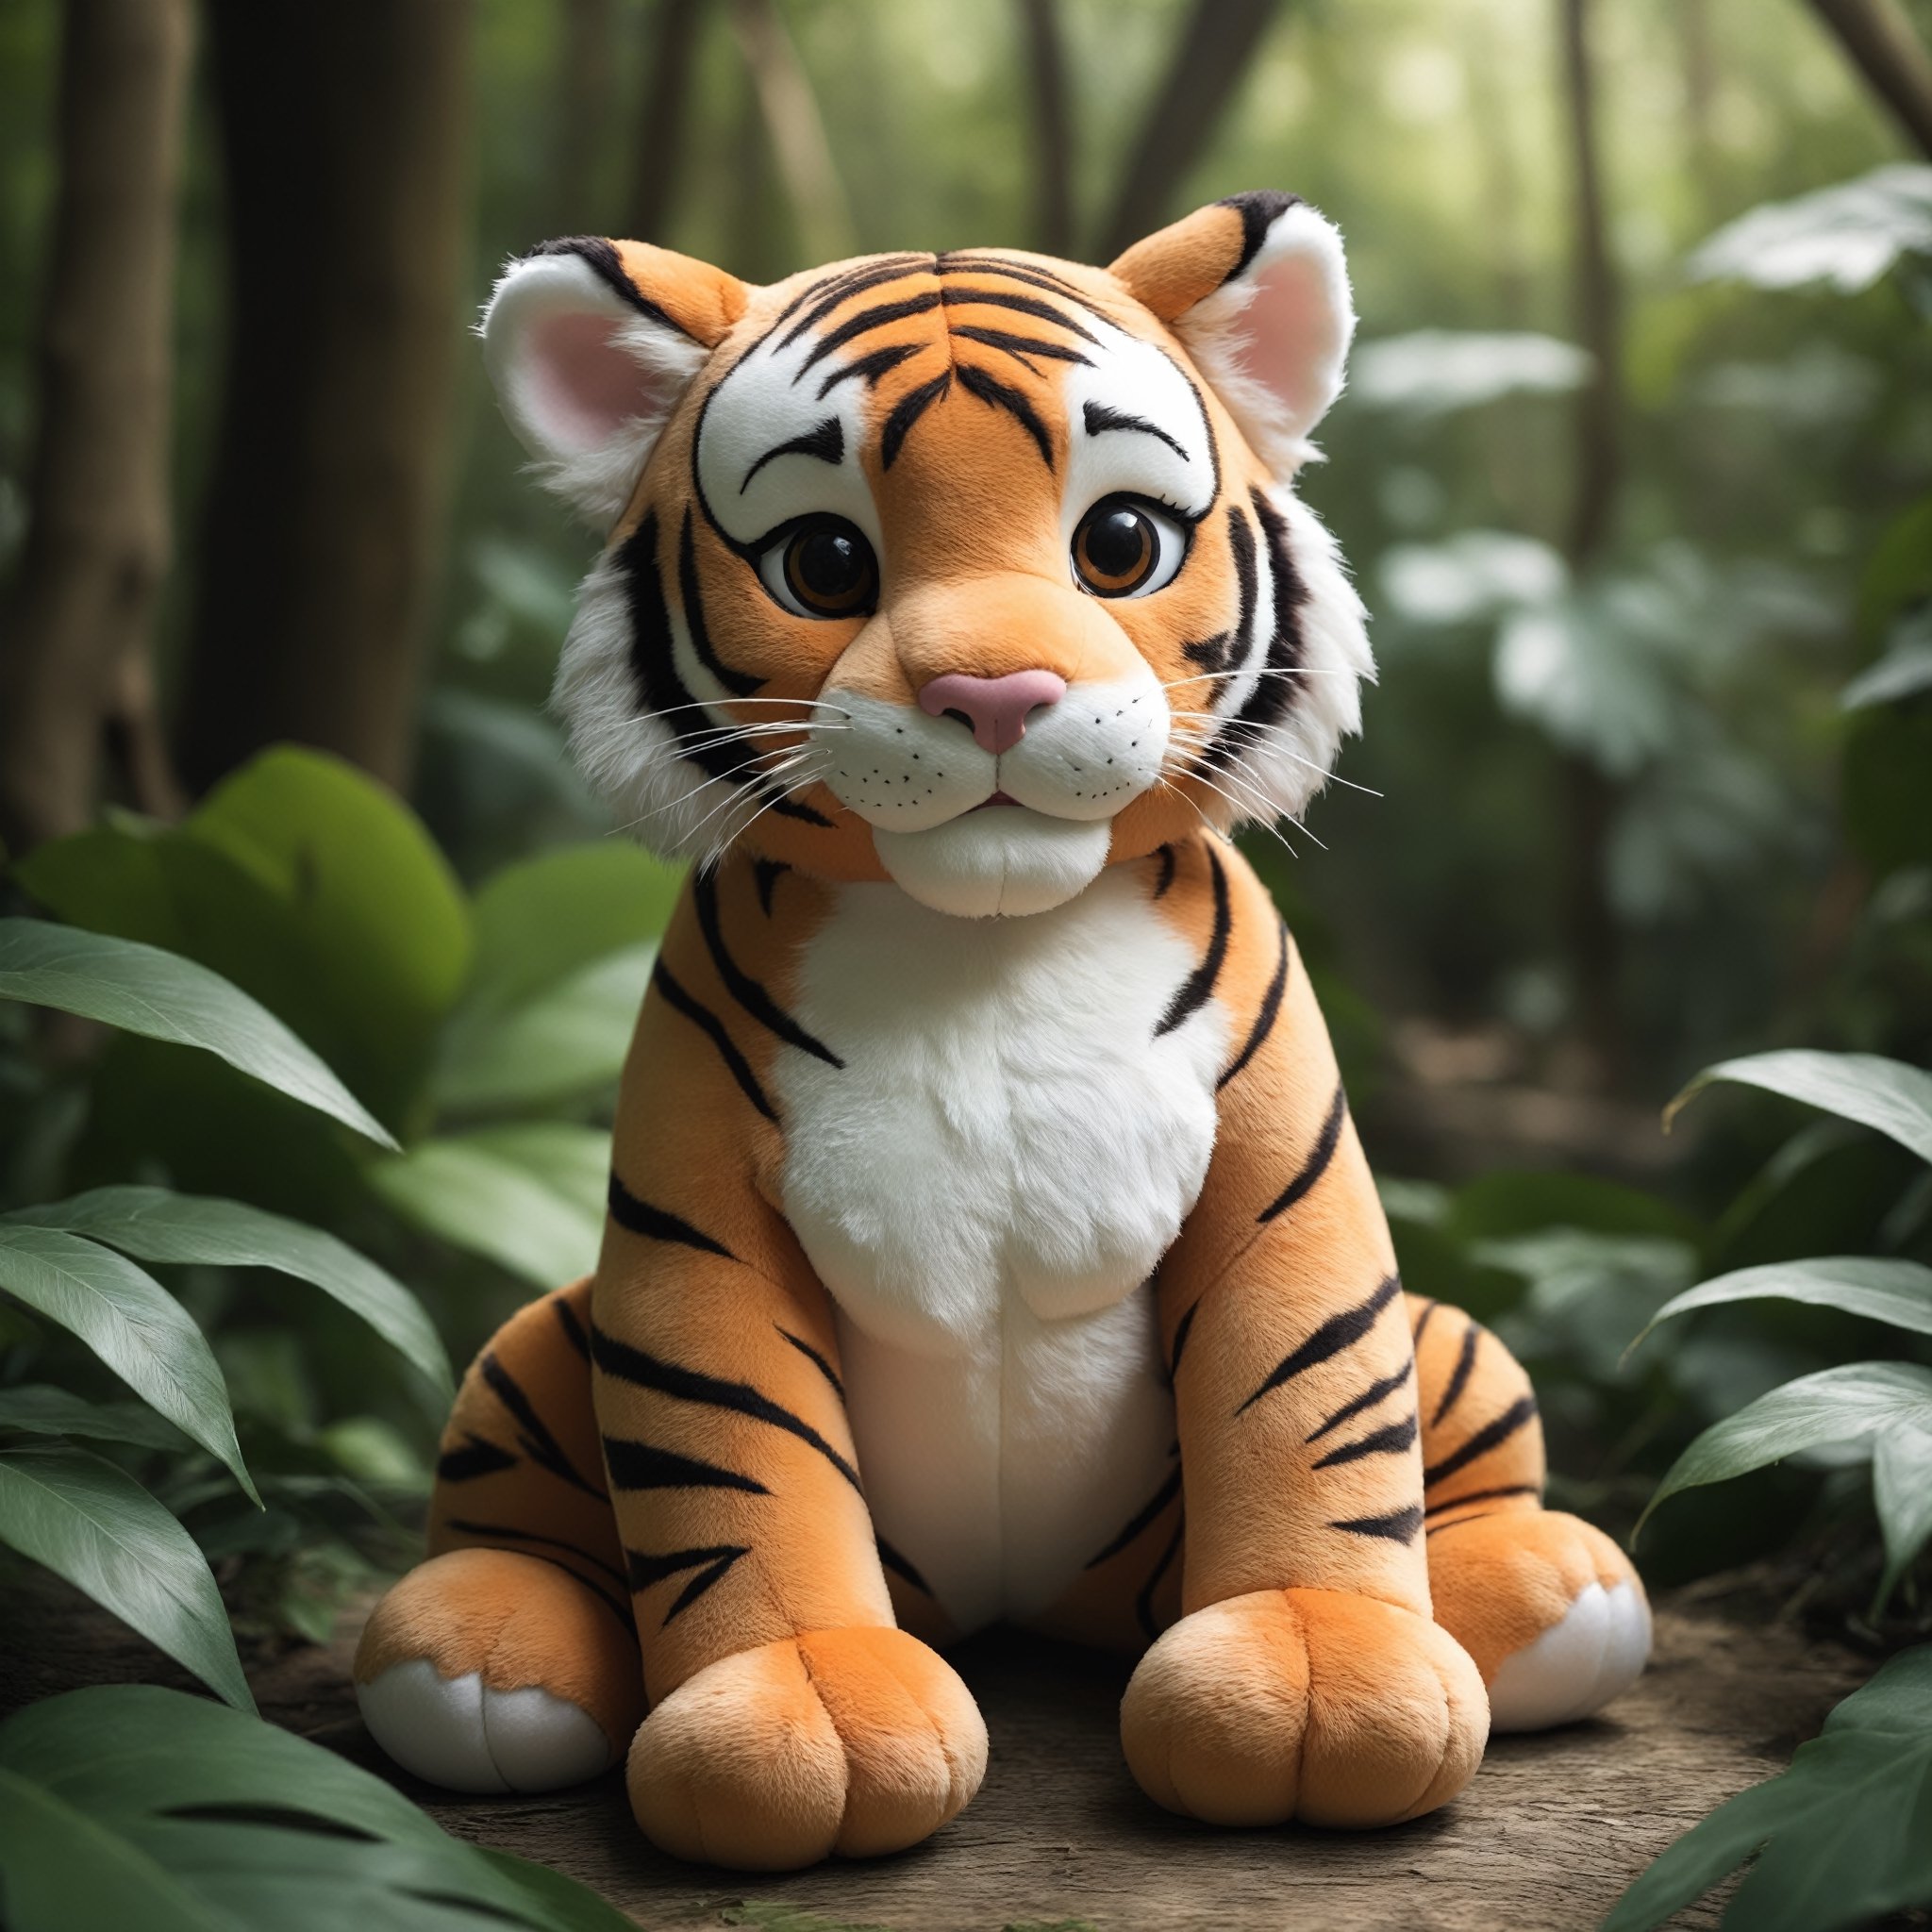 Detailed , photo, tiger plushie, natural light , jungle background 